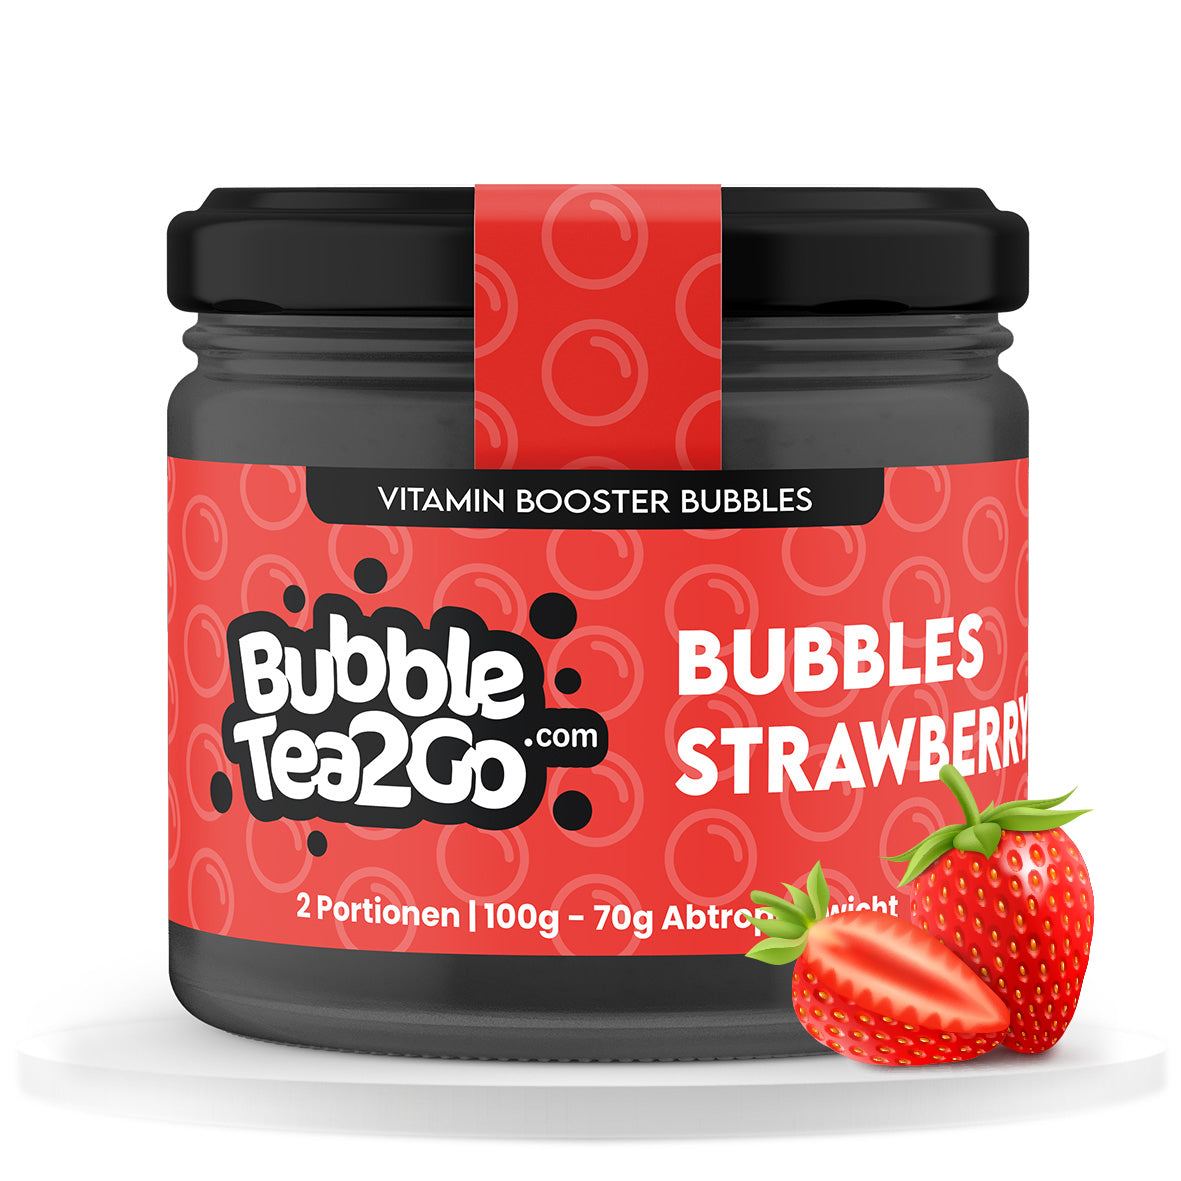 Bubbles - Strawberry 2 servings (120g)